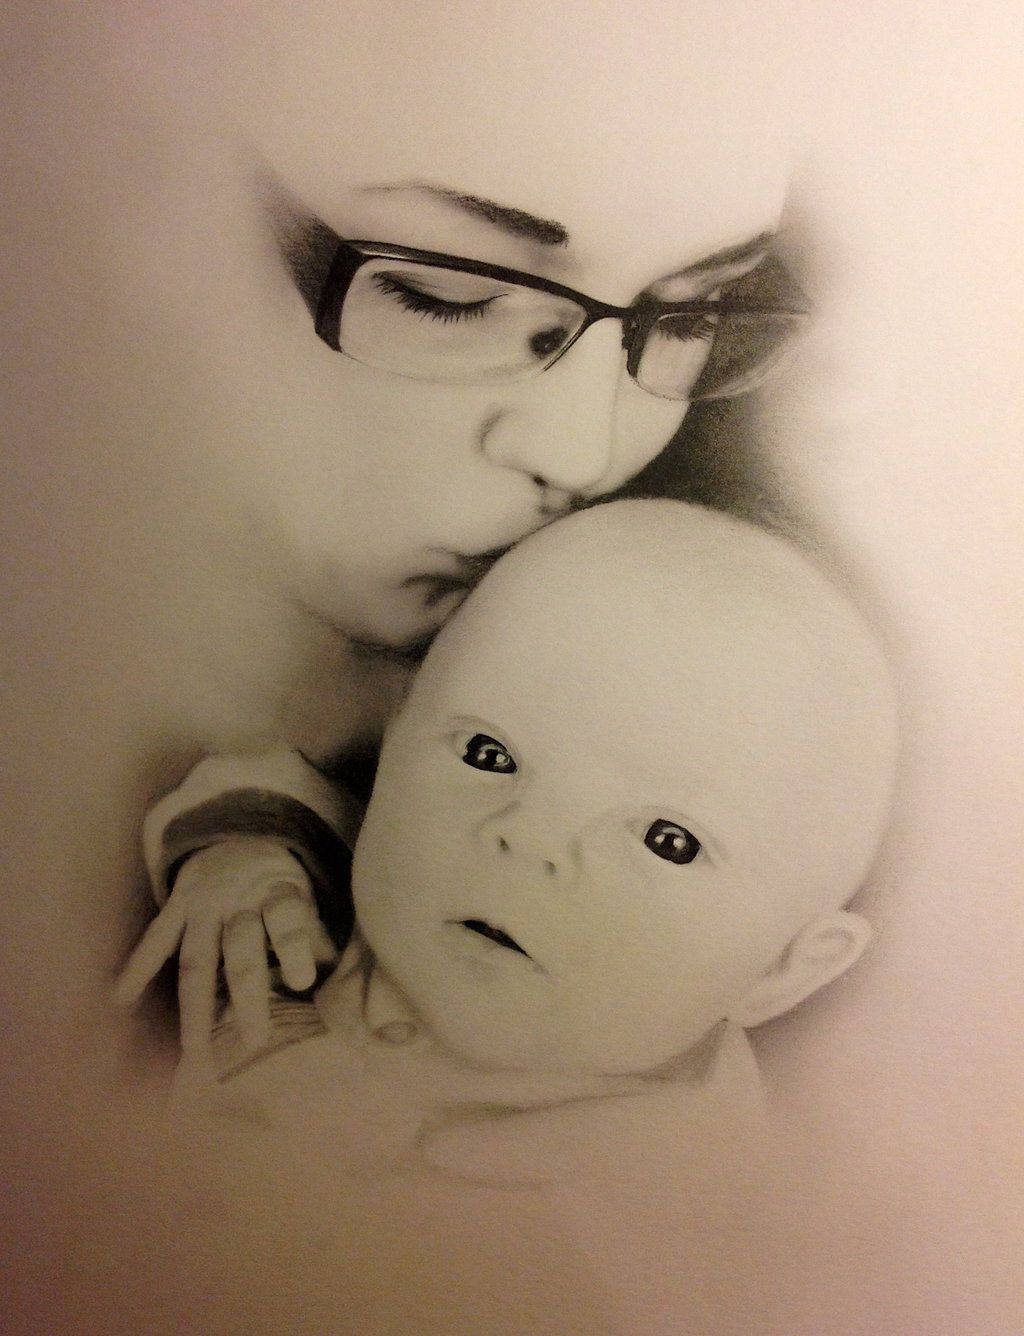 Mom and Son Illustration Wallpaper